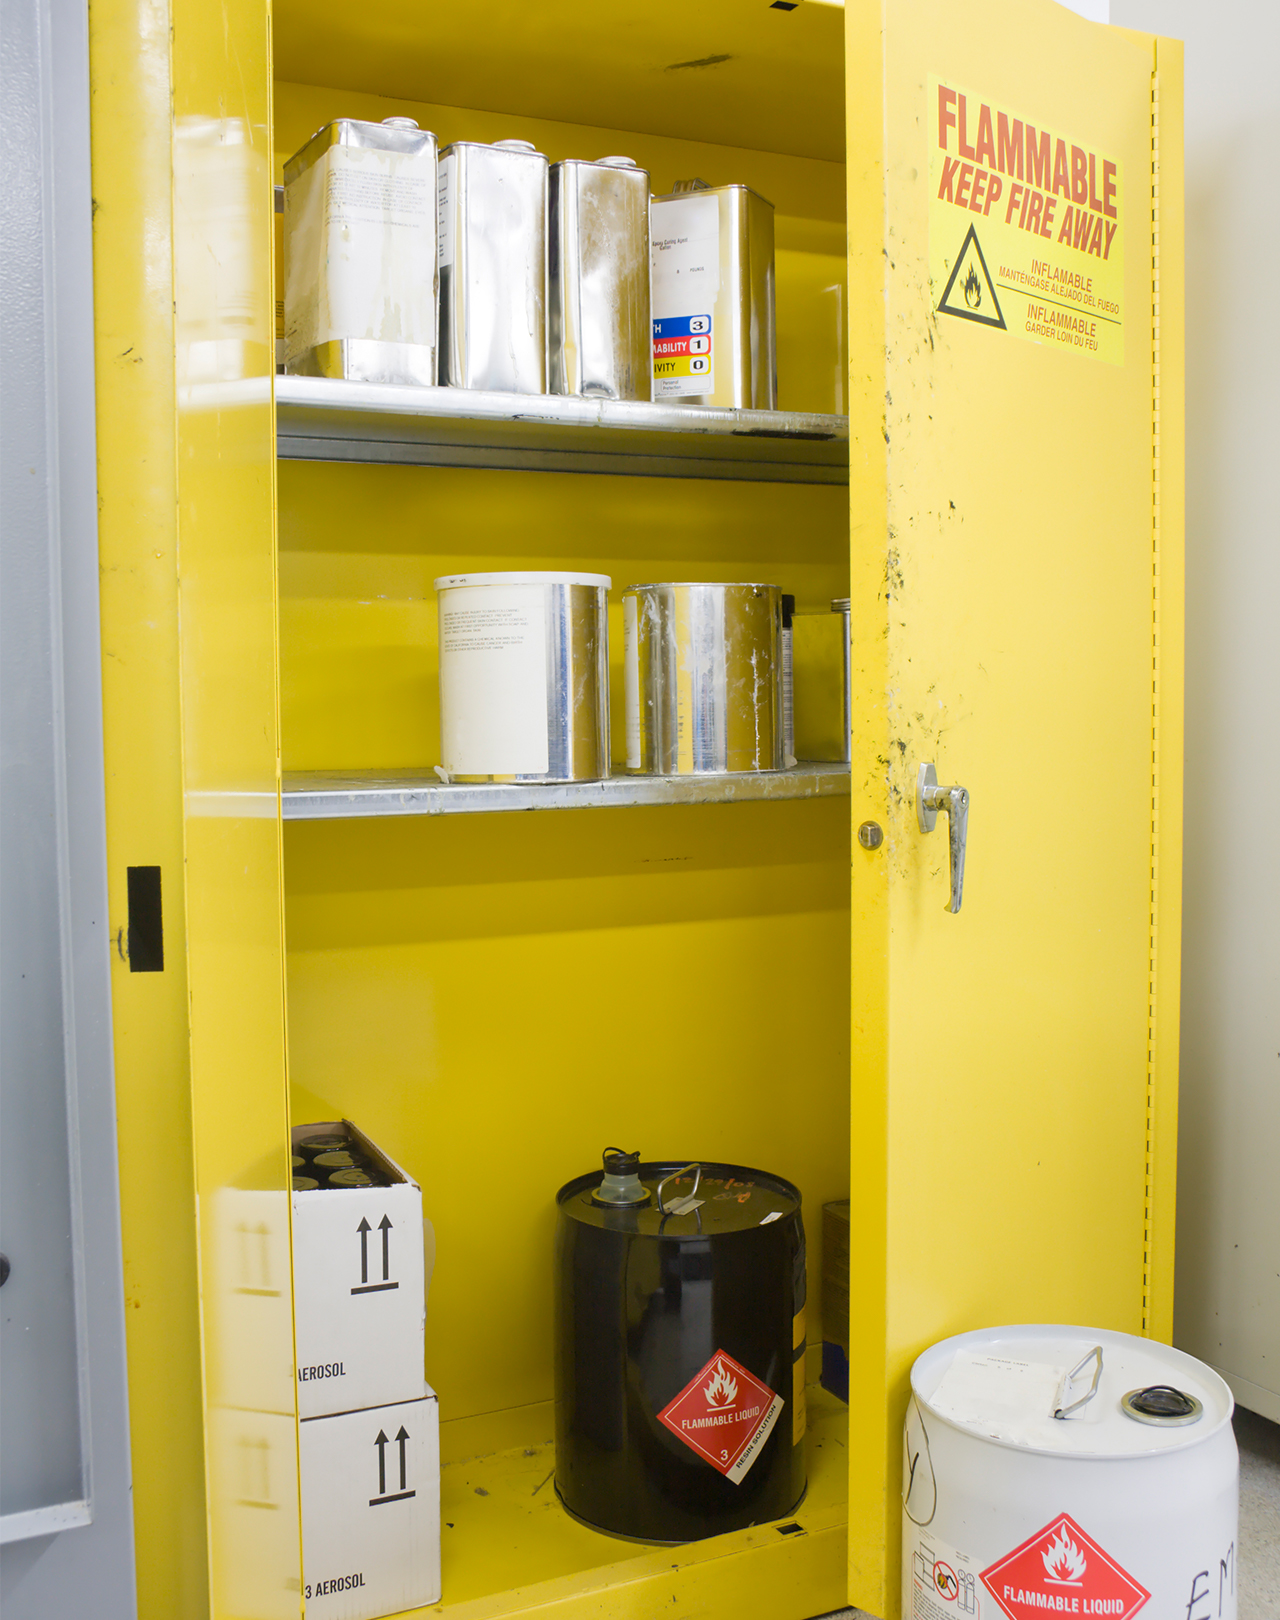 Hazardous flammable storage in a cabinet.